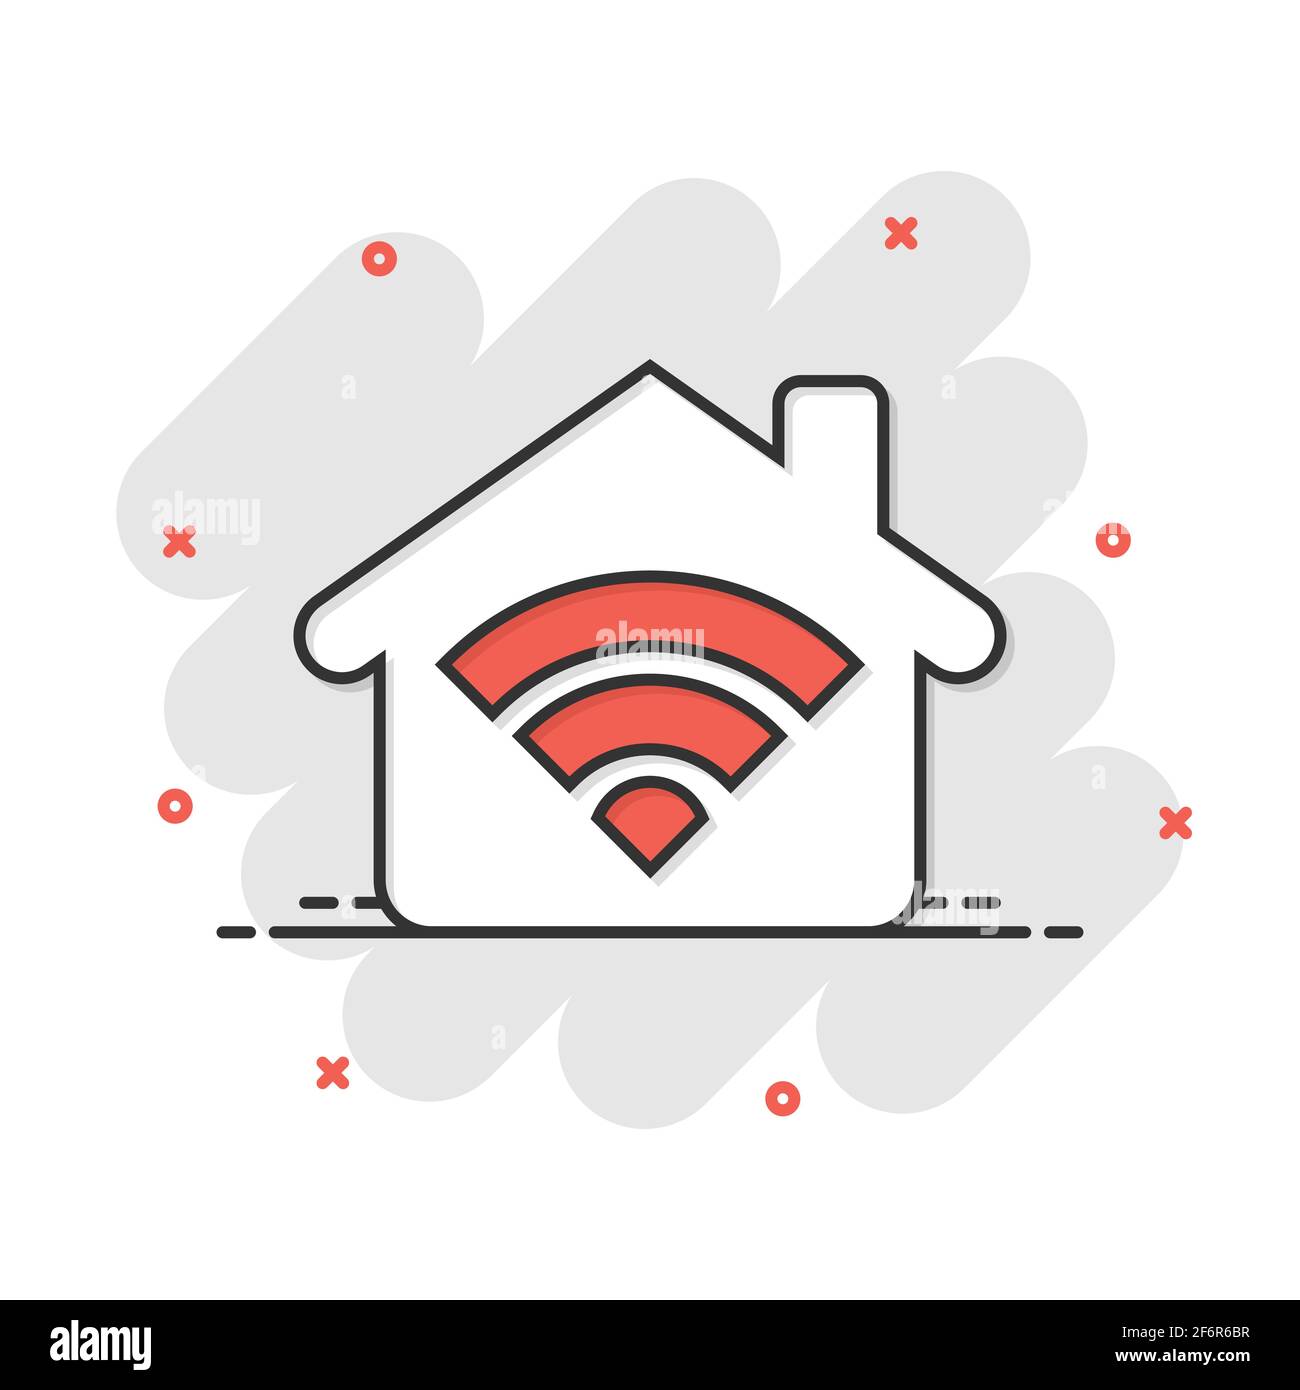 "Smart Home"-Symbol im Comic-stil. Haus der Vektor Cartoon Illustration Piktogramm. Smart Home Business Konzept splash Wirkung. Stock Vektor